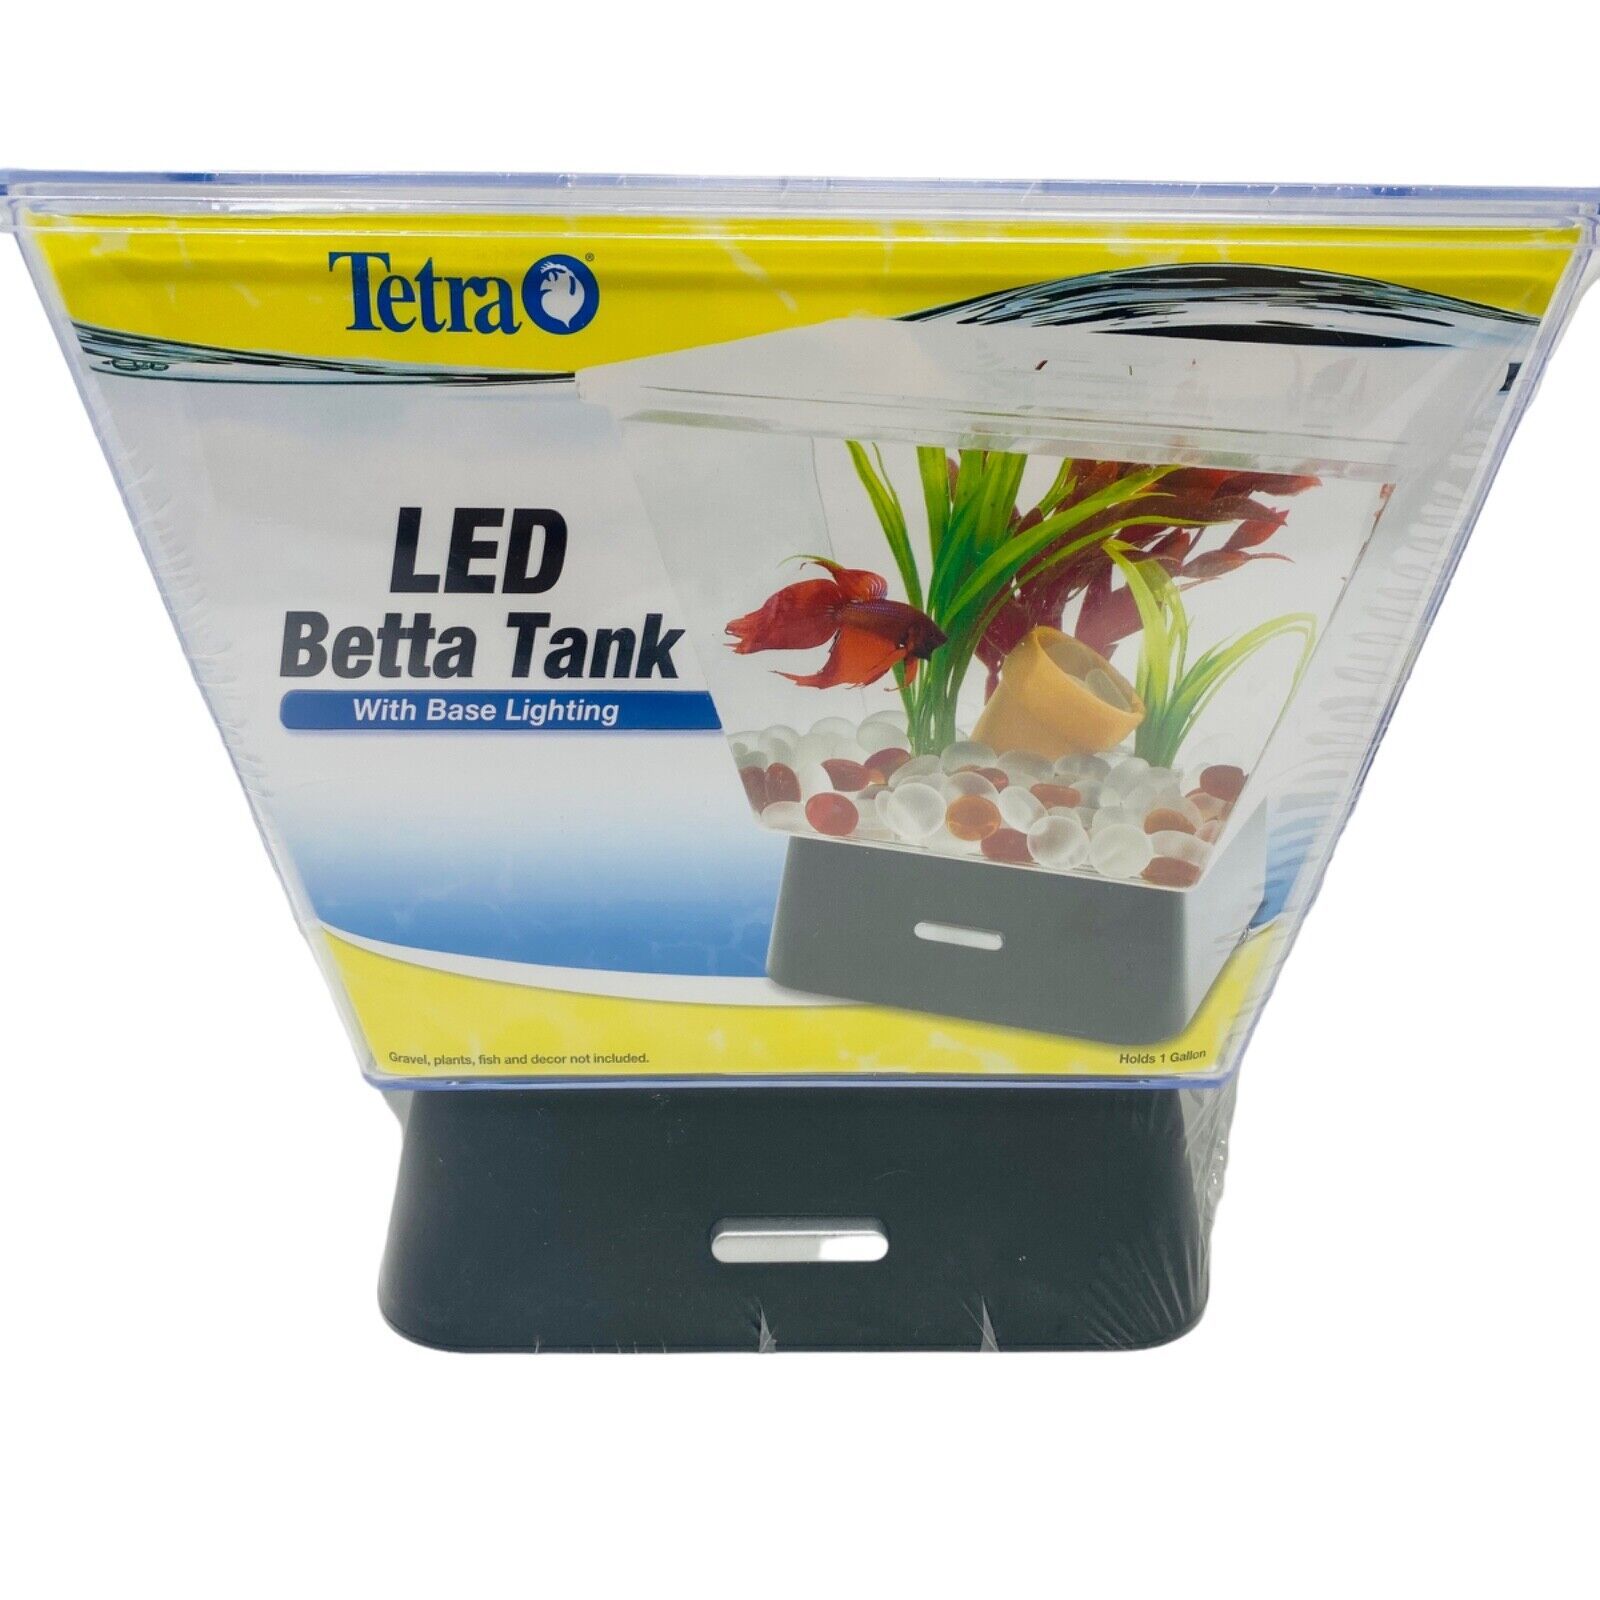 Tetra 1 Gallon LED  Betta Fish Tank with base lighting   9"W X 8" H X 7" D - $19.79